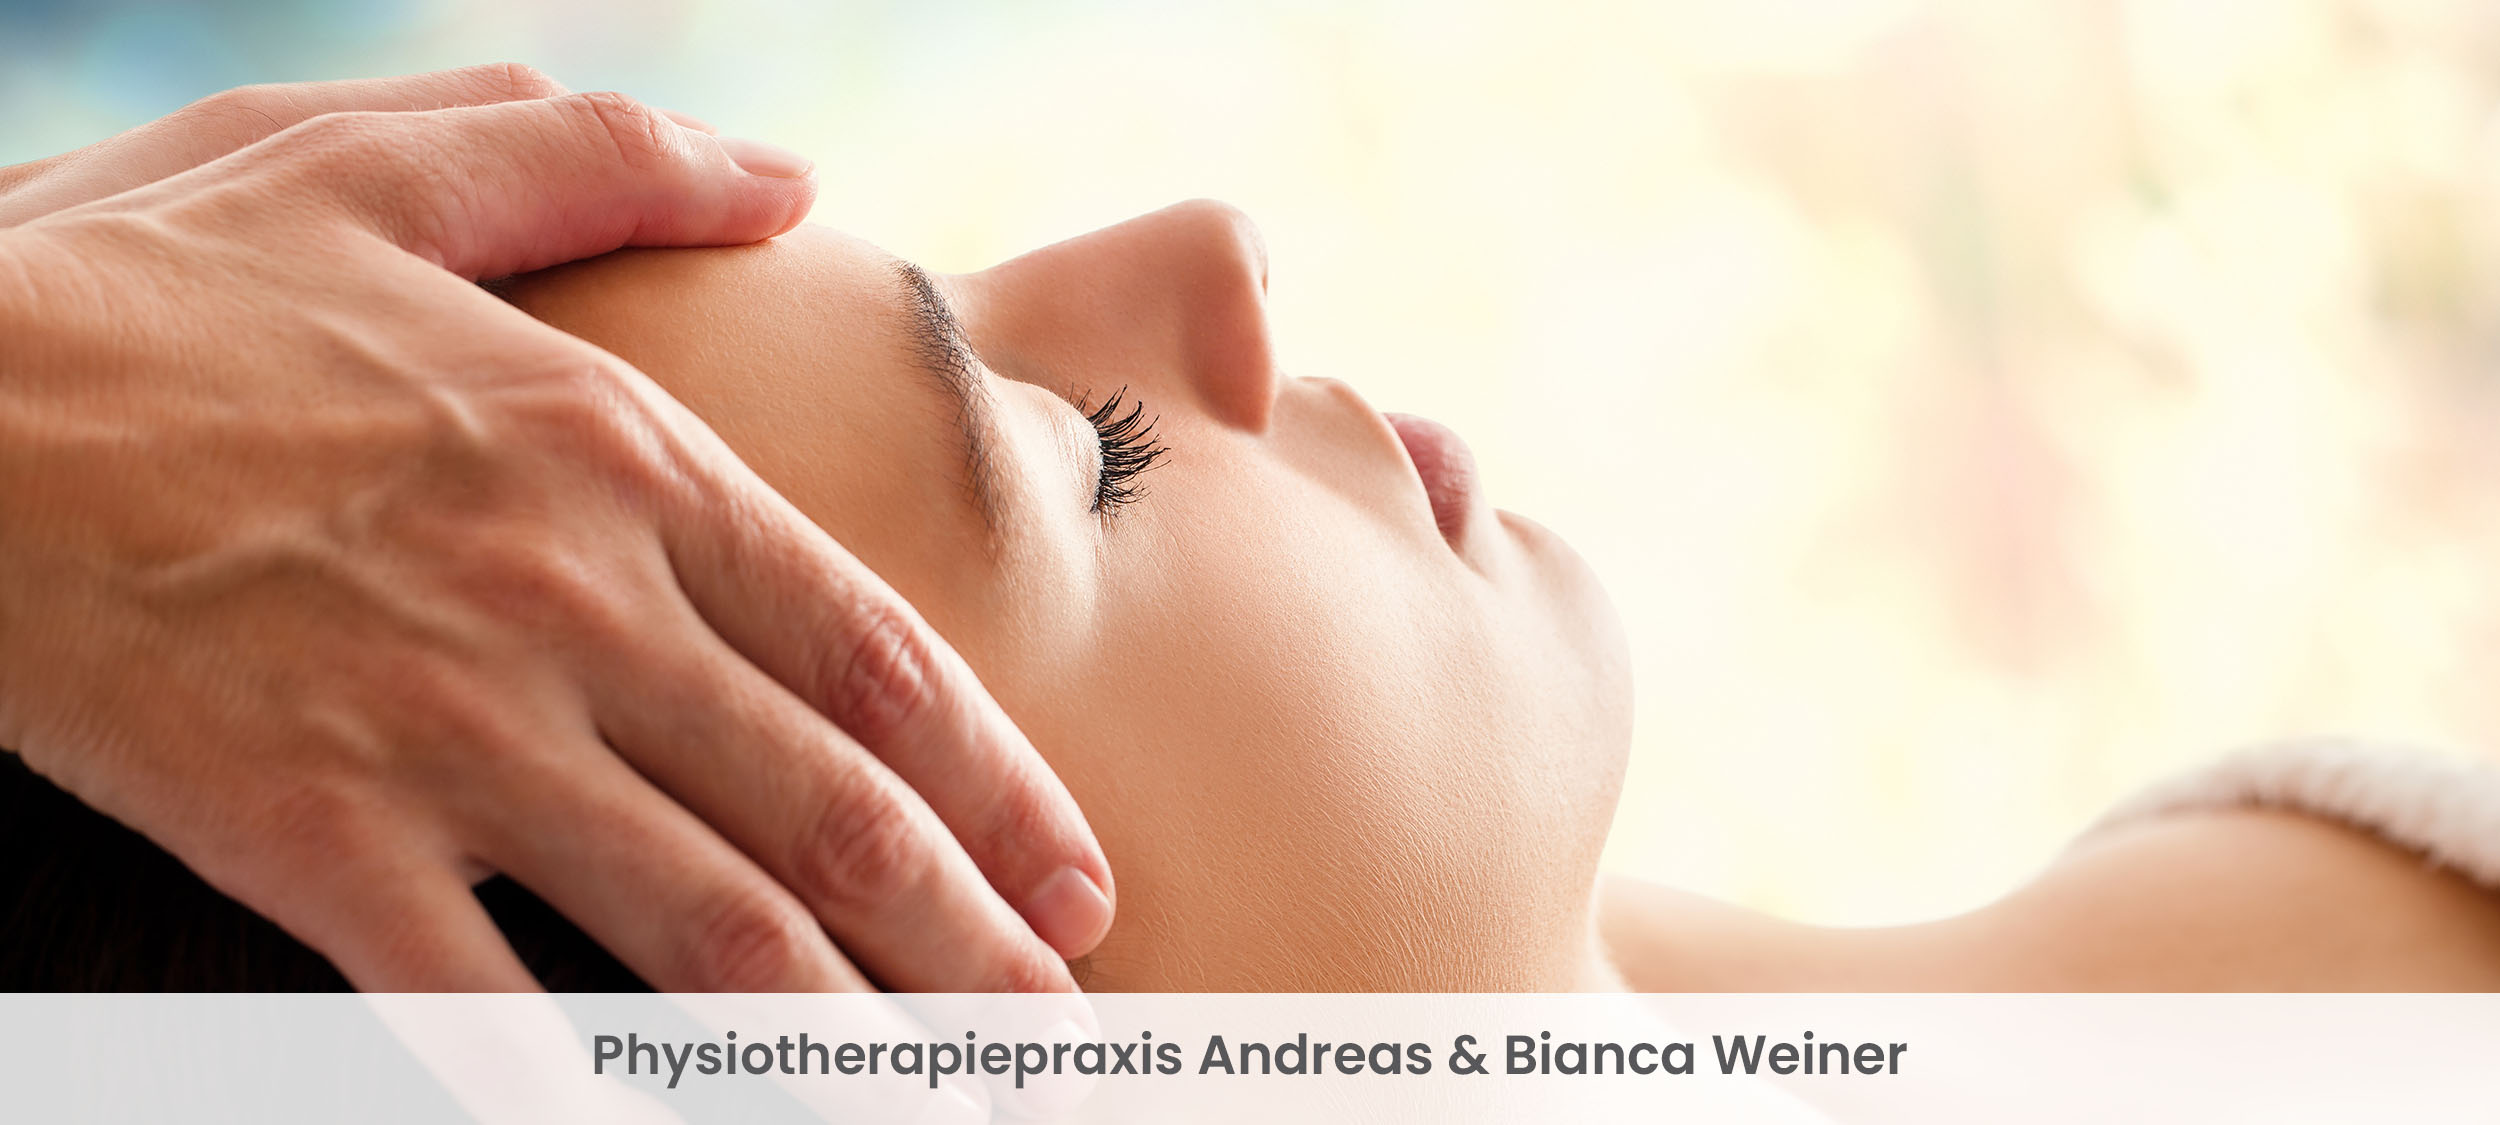 Physiotherapiepraxis Andreas & Bianca Weiner | Header 3